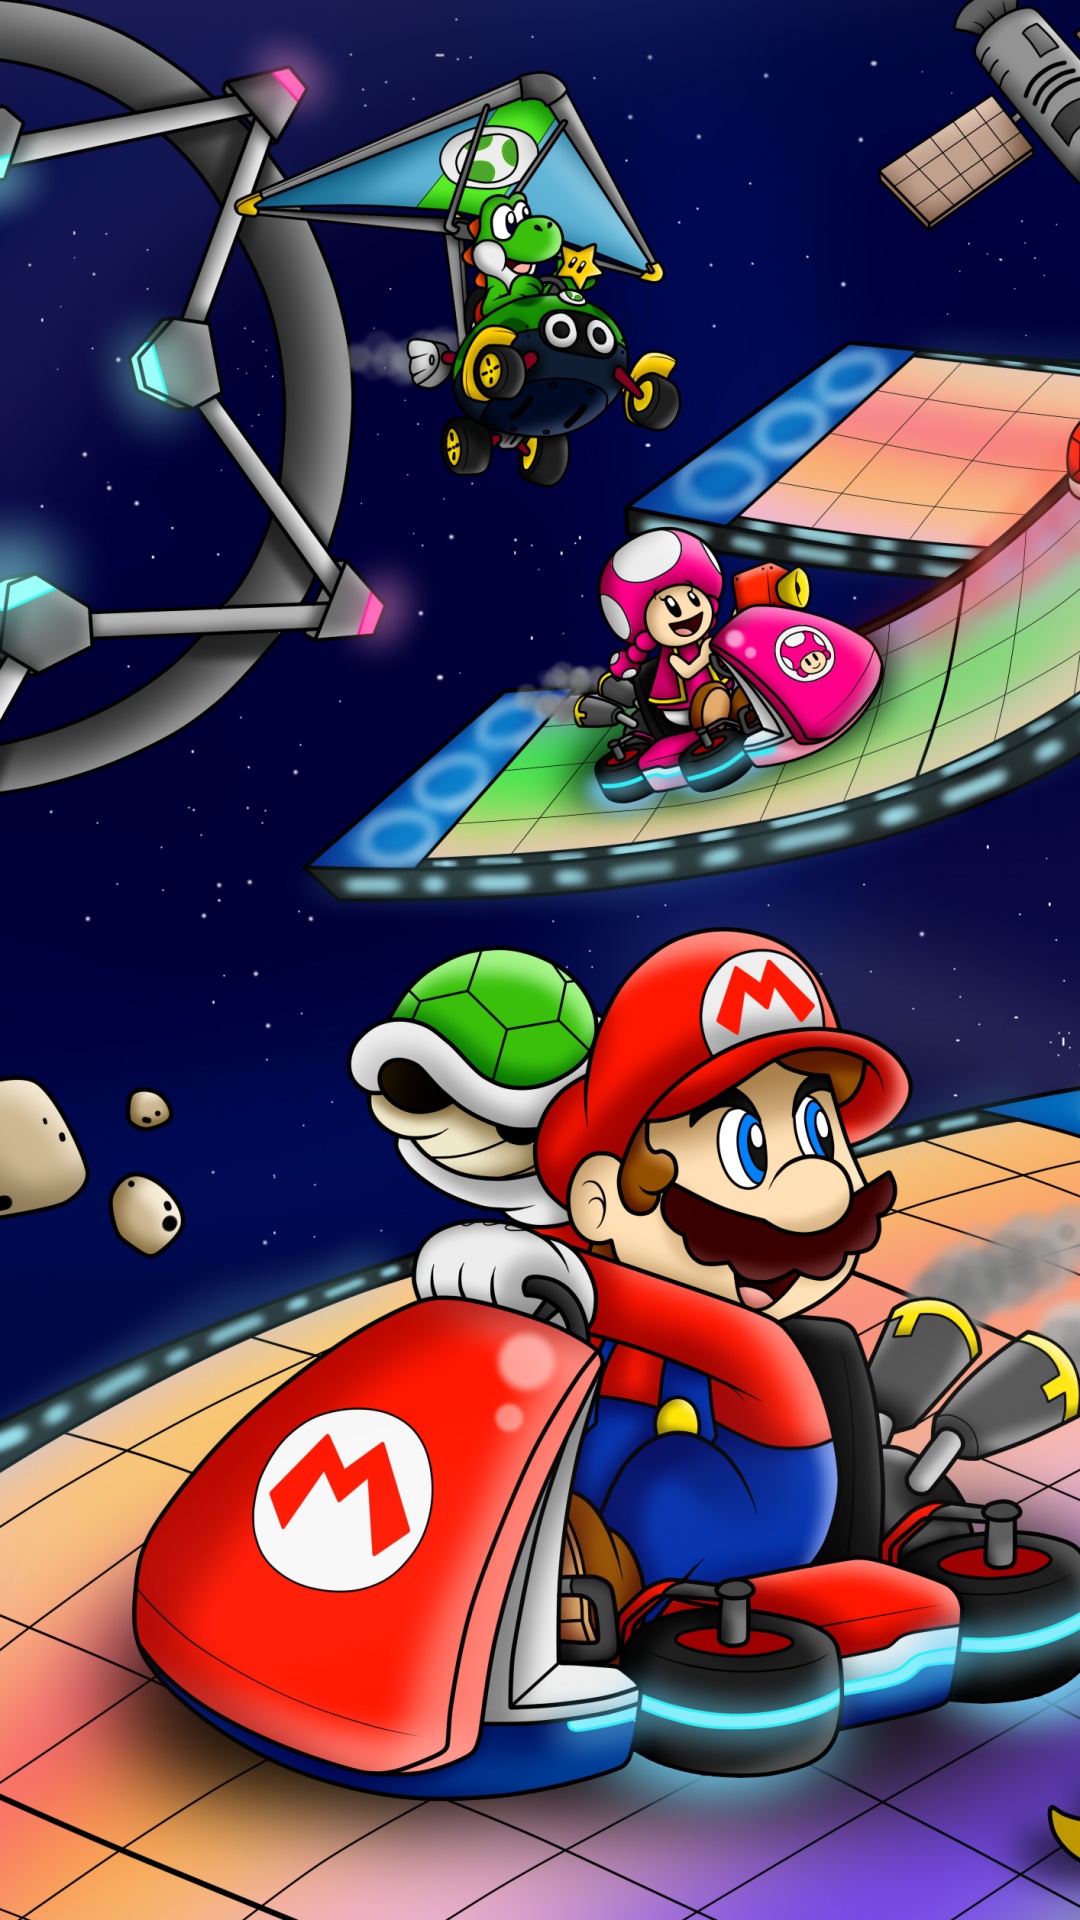 Wallpaper / Video Game Mario Kart 8 Phone Wallpaper, Mario, Toadette (Super Mario), Yoshi, 1080x1920 free download